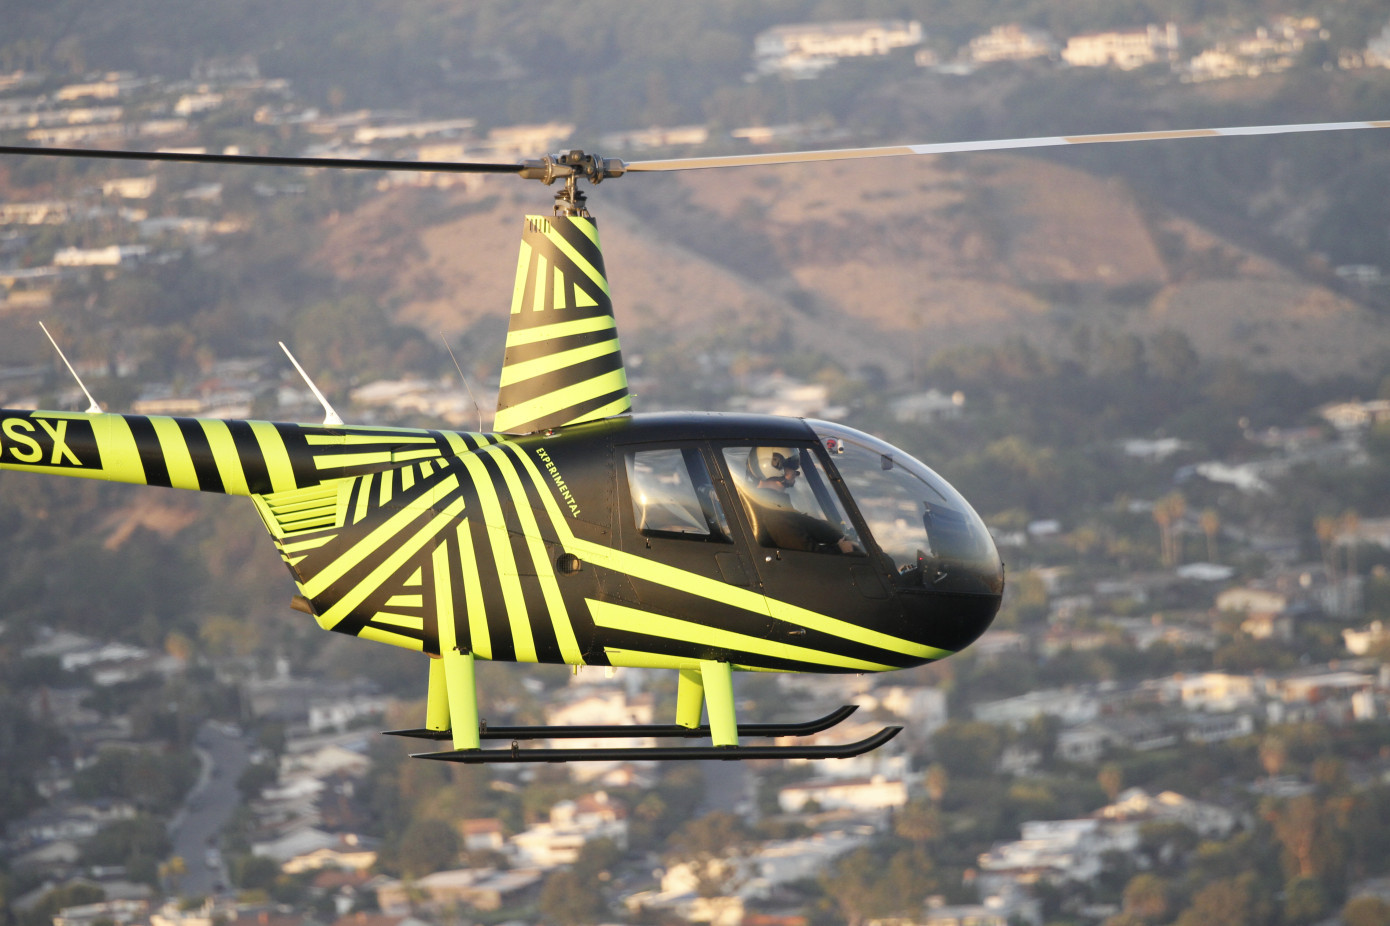 Skyryseは離陸から着陸まですべて自動操縦可能なヘリの飛行技術をデモ